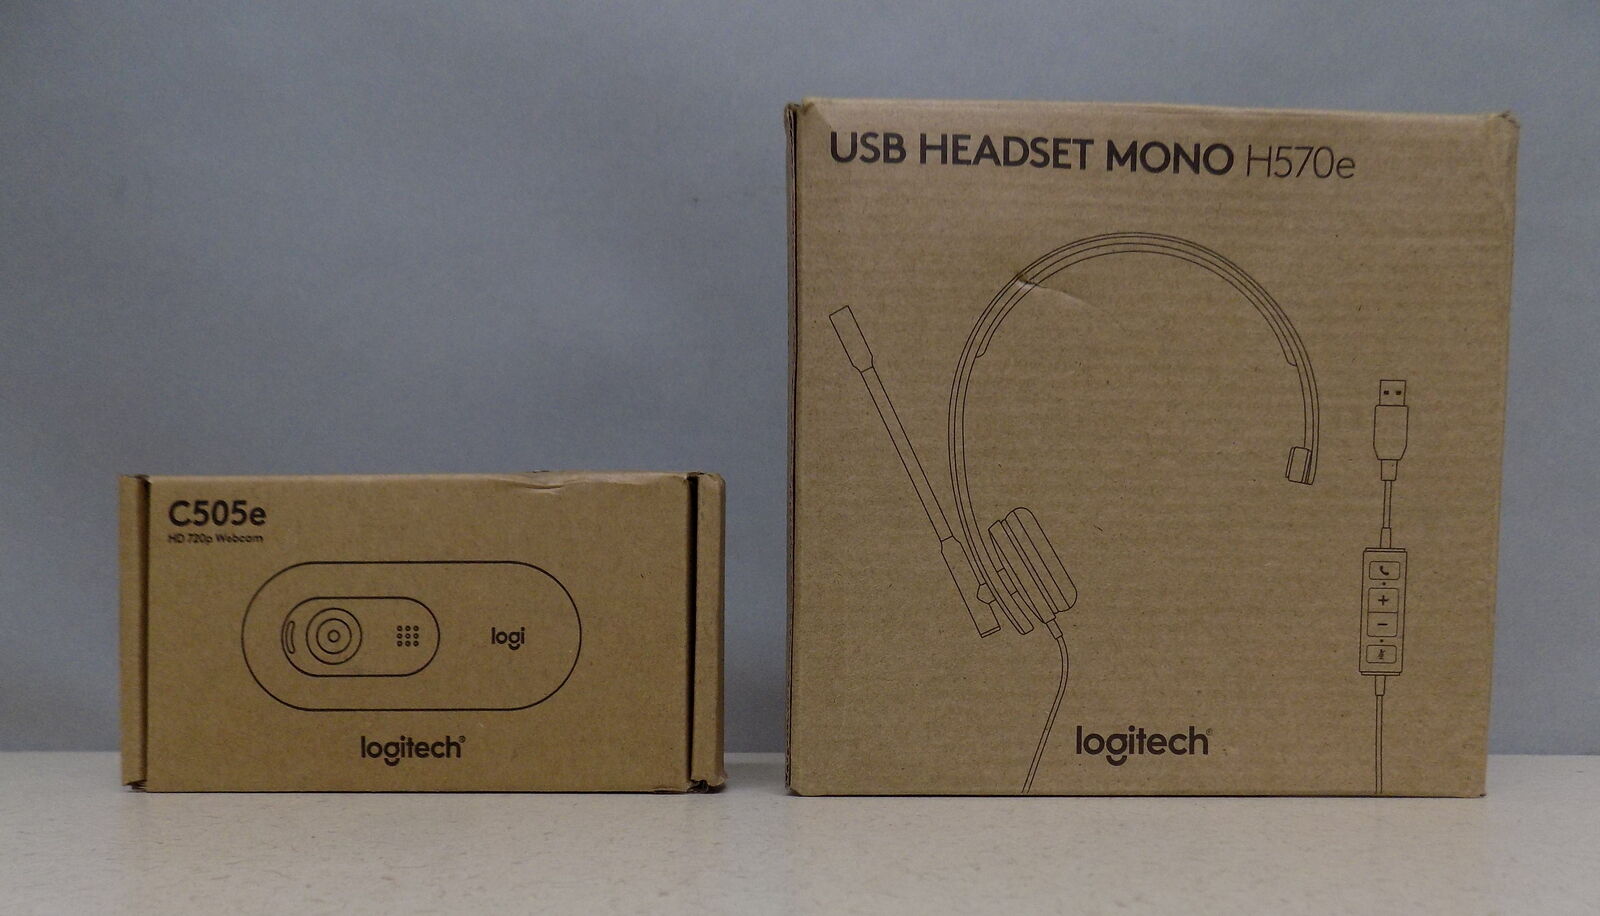 Logitech Bundle - USB Headset Mono H570e & HD 720p Webcam C505e 